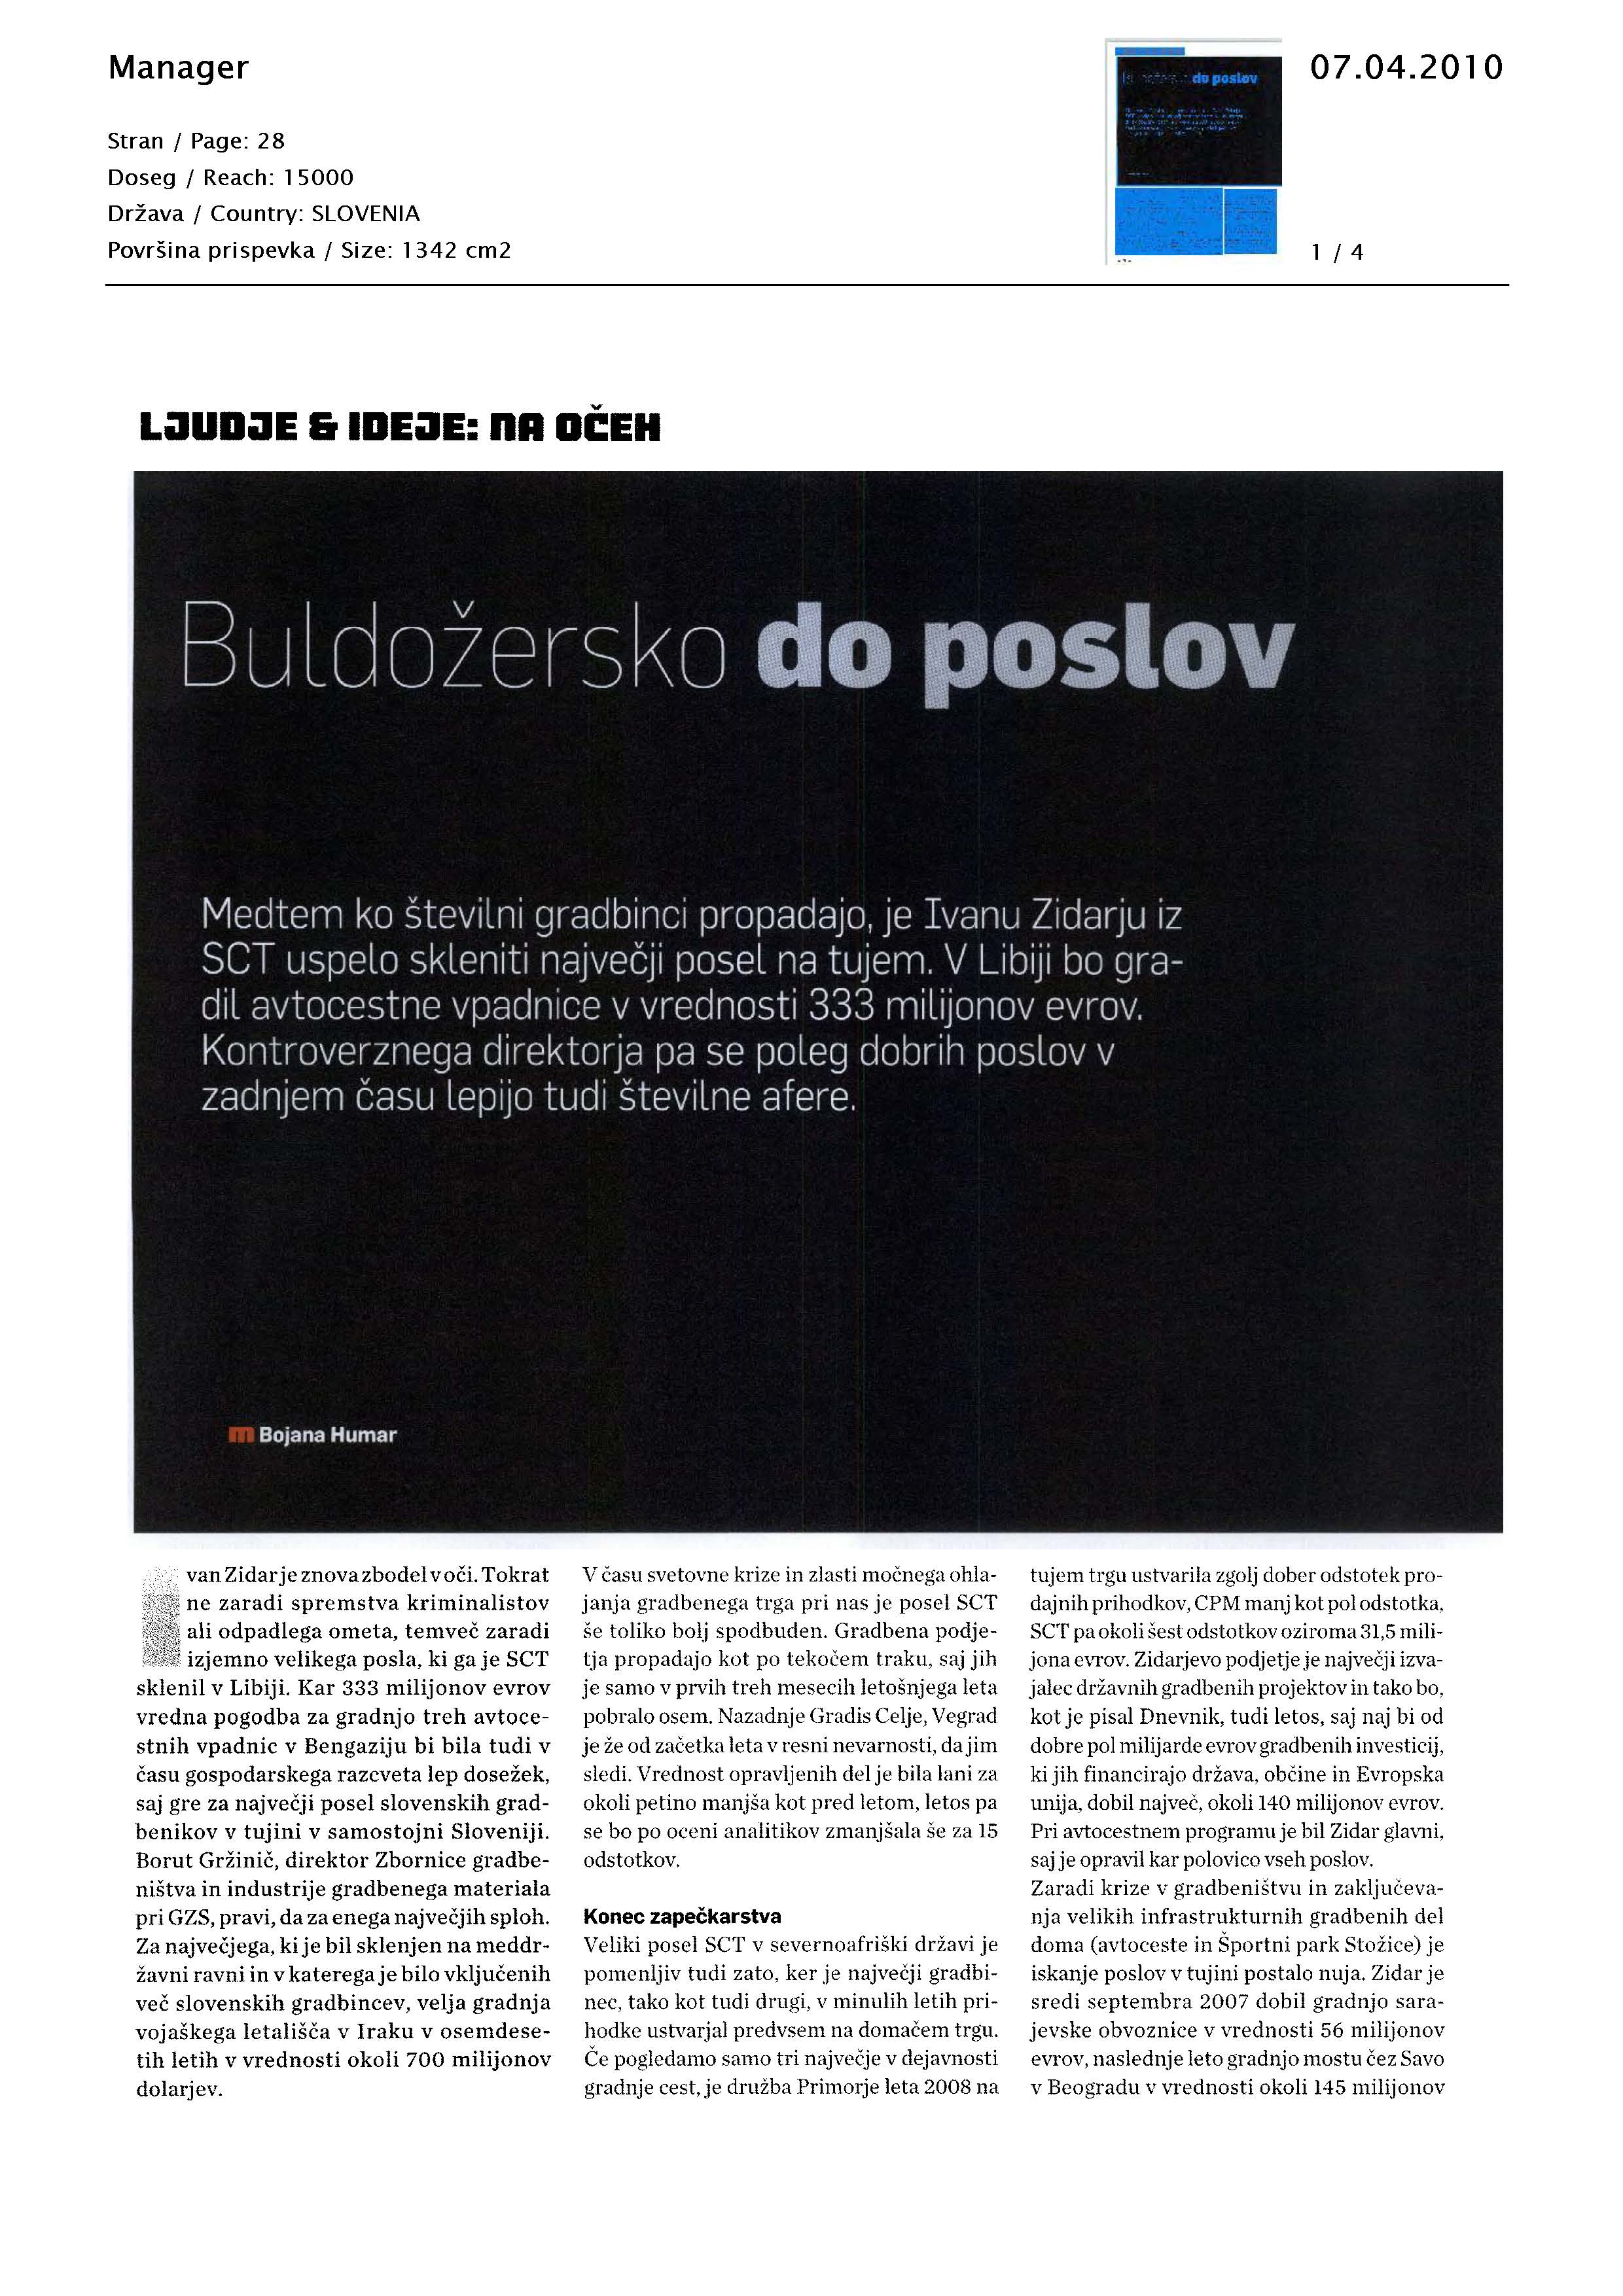 Buldoersko_do_poslov_Page_1